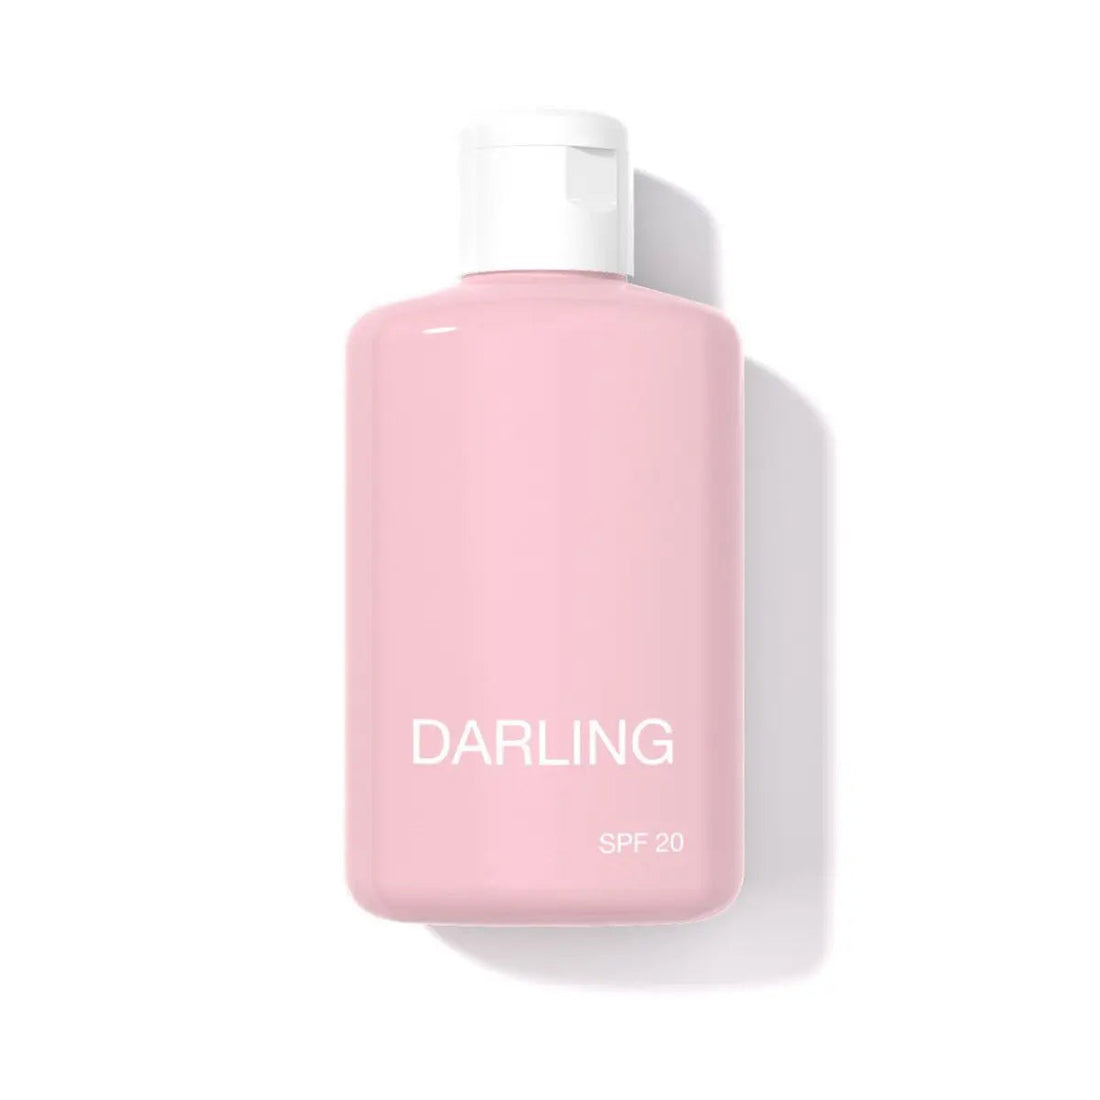 Darling Émulsion Moyenne Protection Spf 20 150 ml